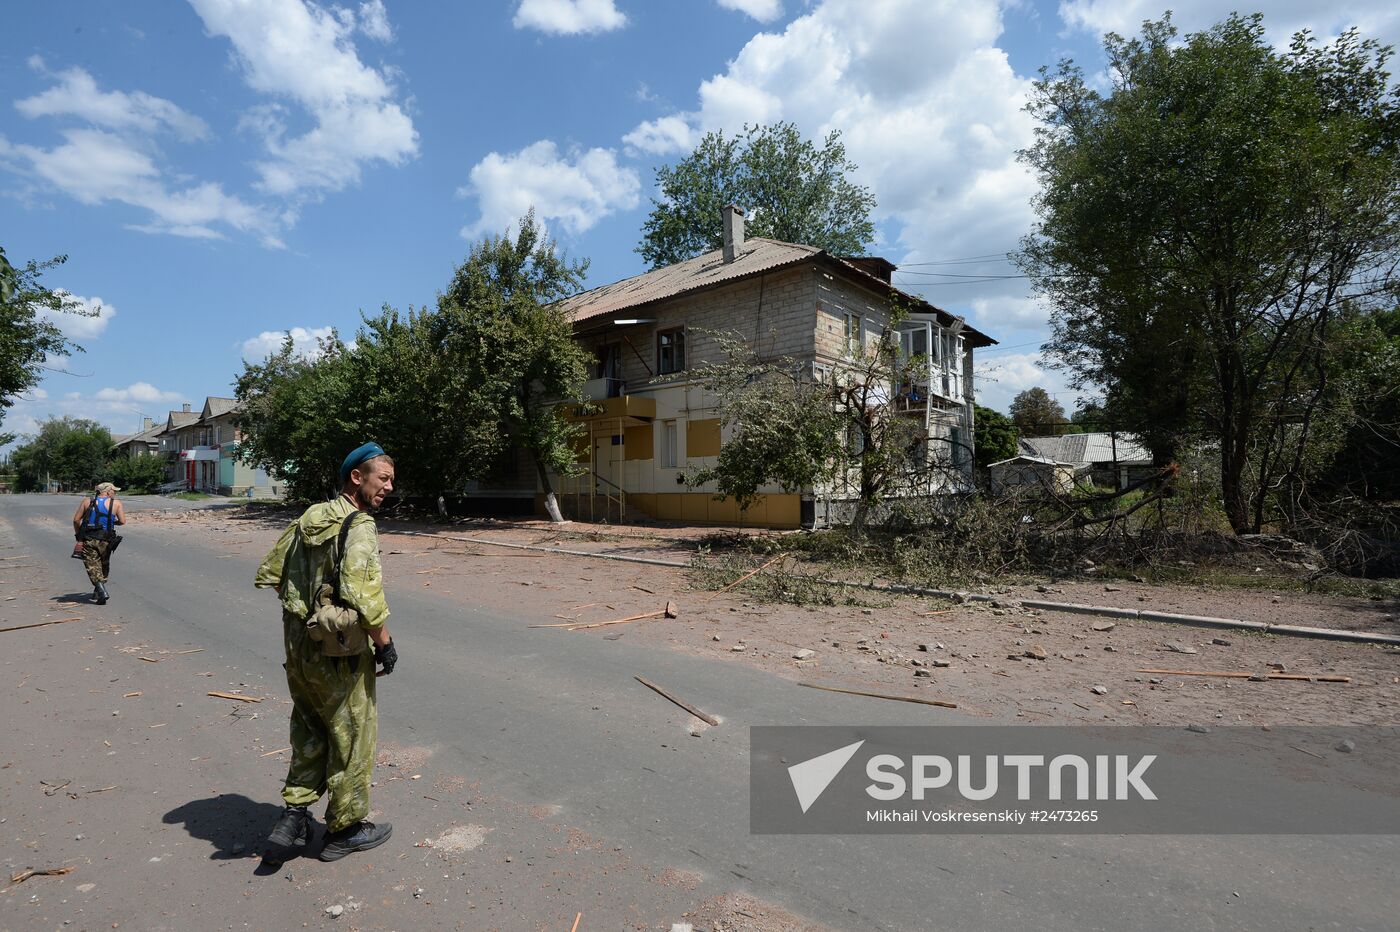 Update on Shakhtyorsk, Donetsk Region